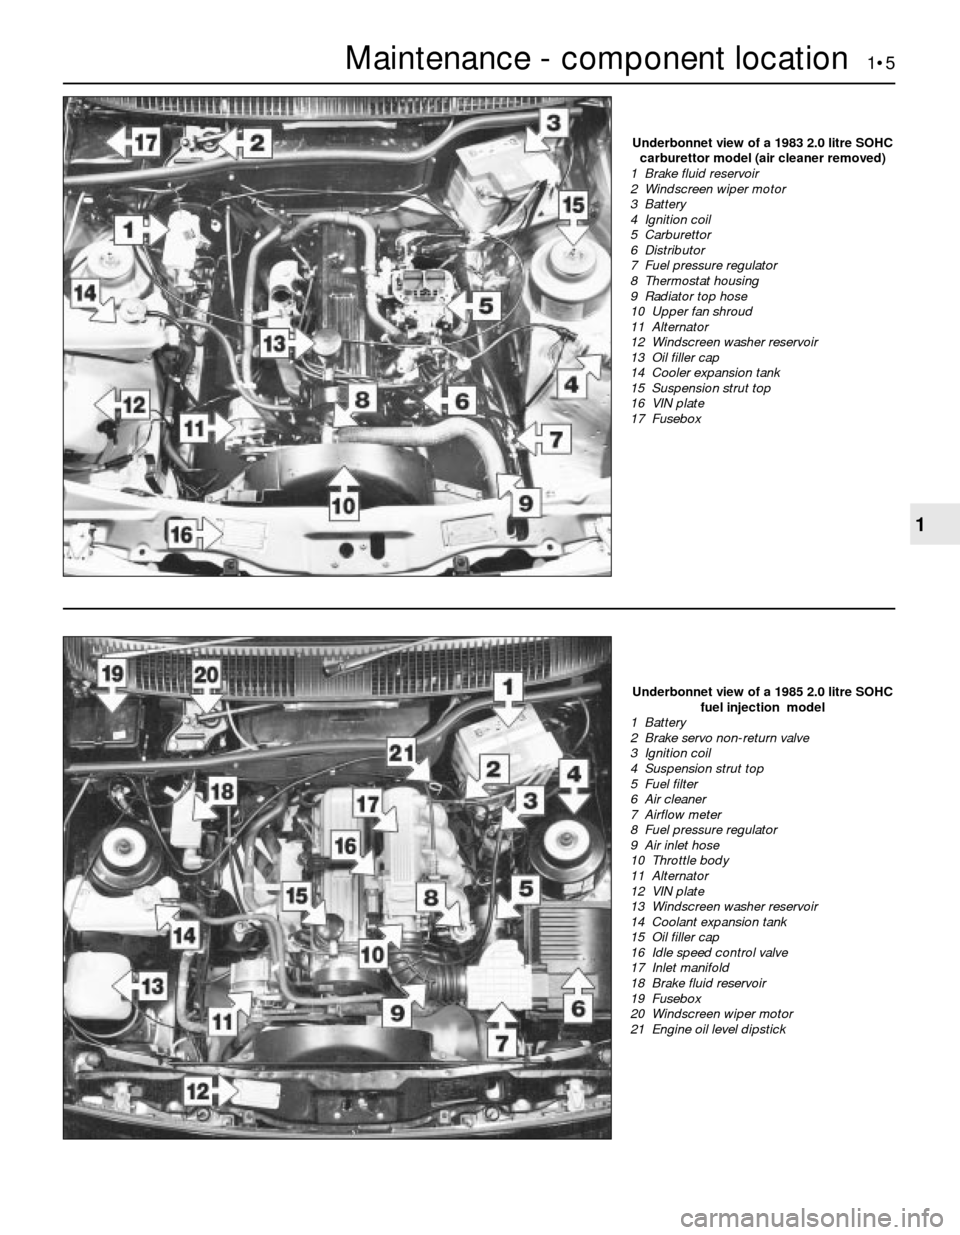 FORD SIERRA 1984 1.G Routine Manintenance And Servicing Workshop Manual Maintenance - component location  1•5
1
Underbonnet view of a 1985 2.0 litre SOHC
fuel injection  model
1  Battery
2  Brake servo non-return valve
3  Ignition coil
4  Suspension strut top
5  Fuel fi